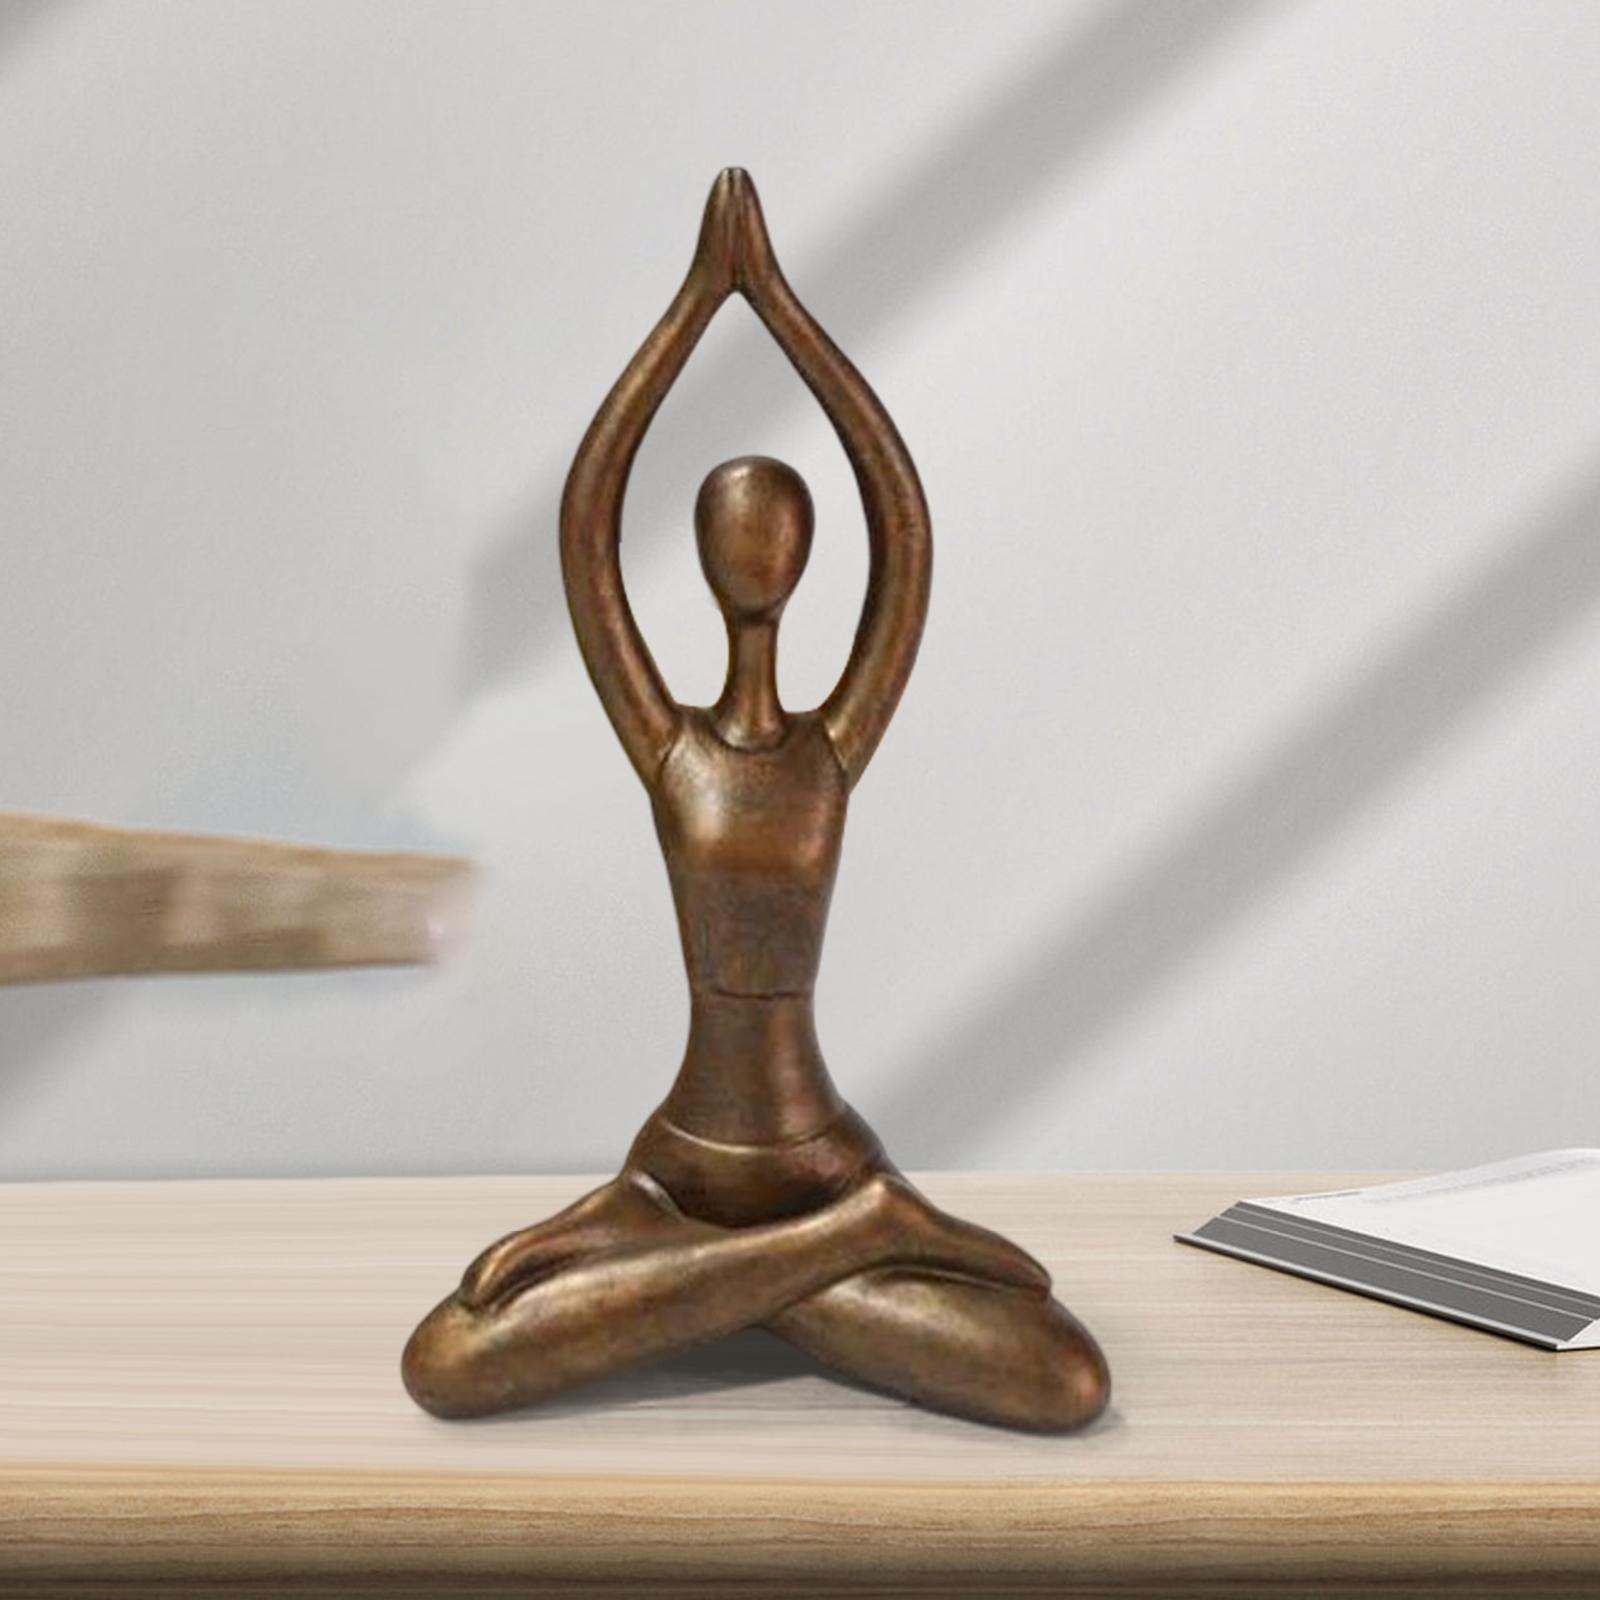 Meditation Yoga Pose Statue Arts Crafts for Desktop Decor Hands Above Head